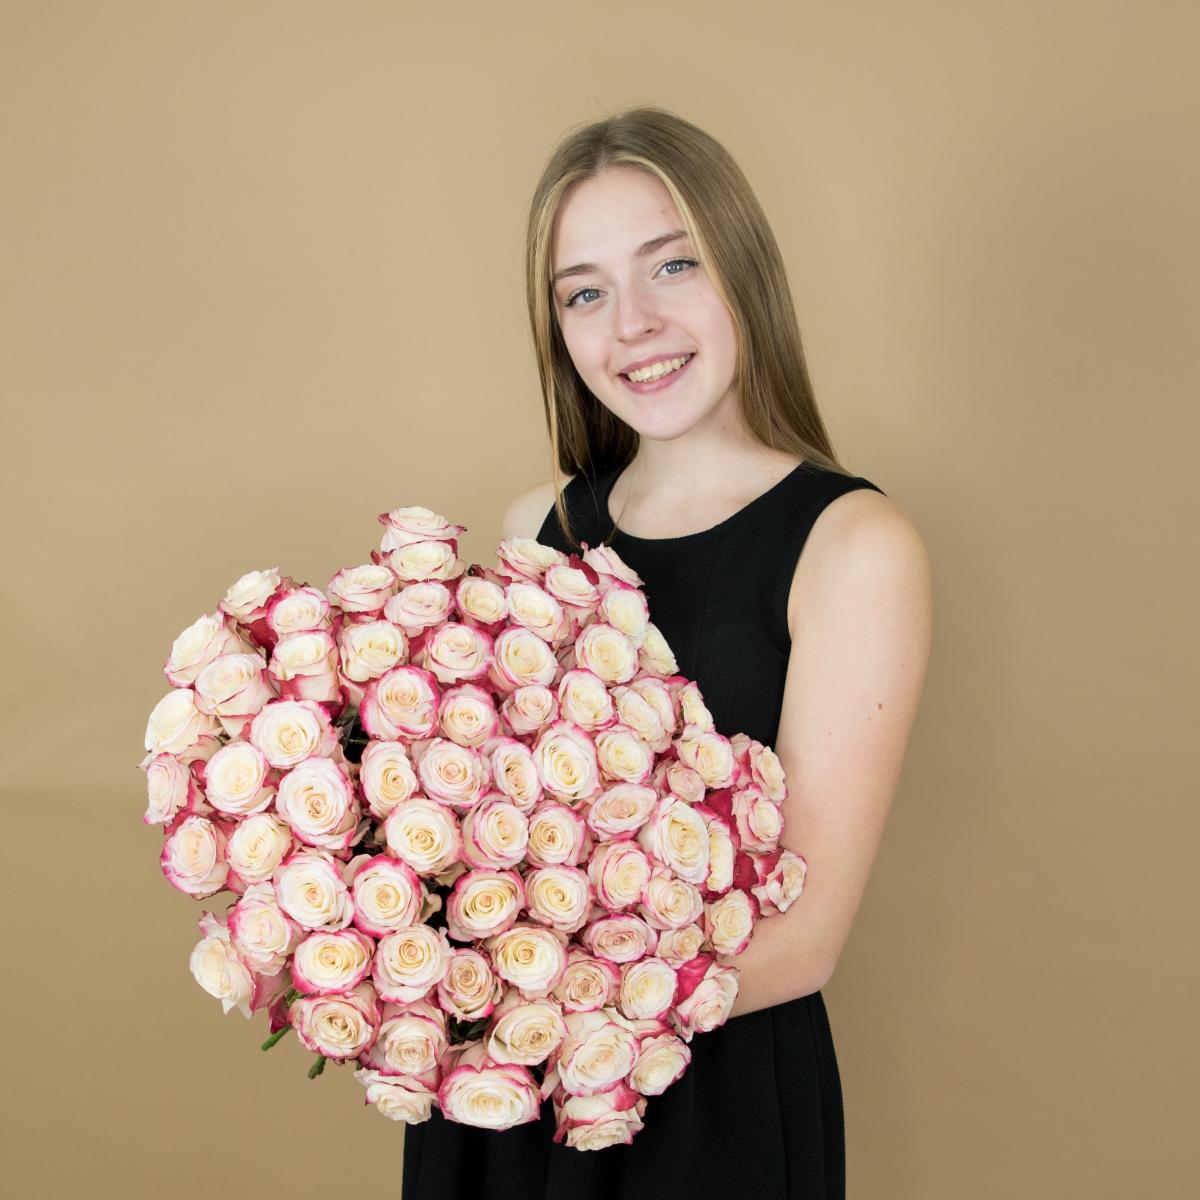 Розы красно-белые 75 шт 40 см (Эквадор) [артикул букета: 86879]